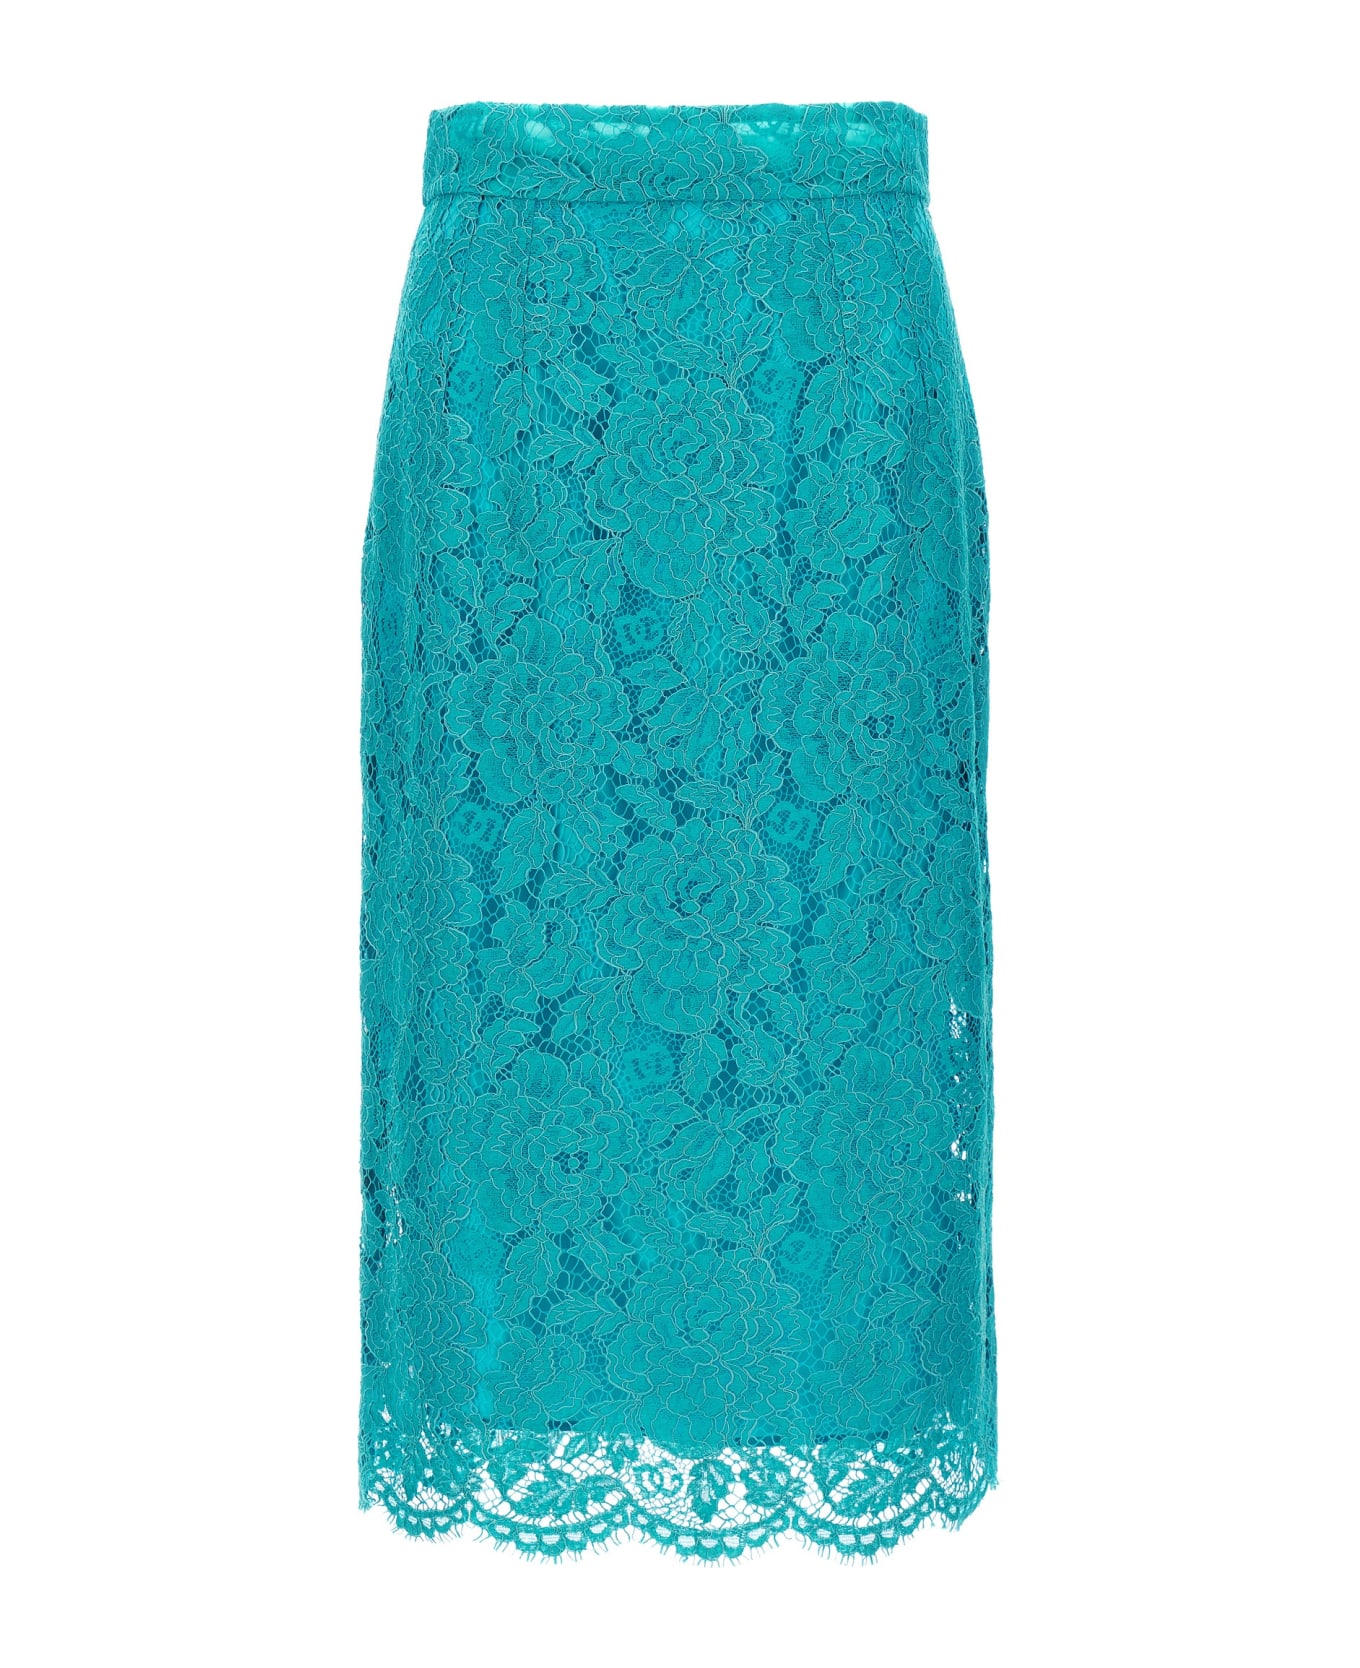 Dolce & Gabbana Lace Skirt - Light Blue